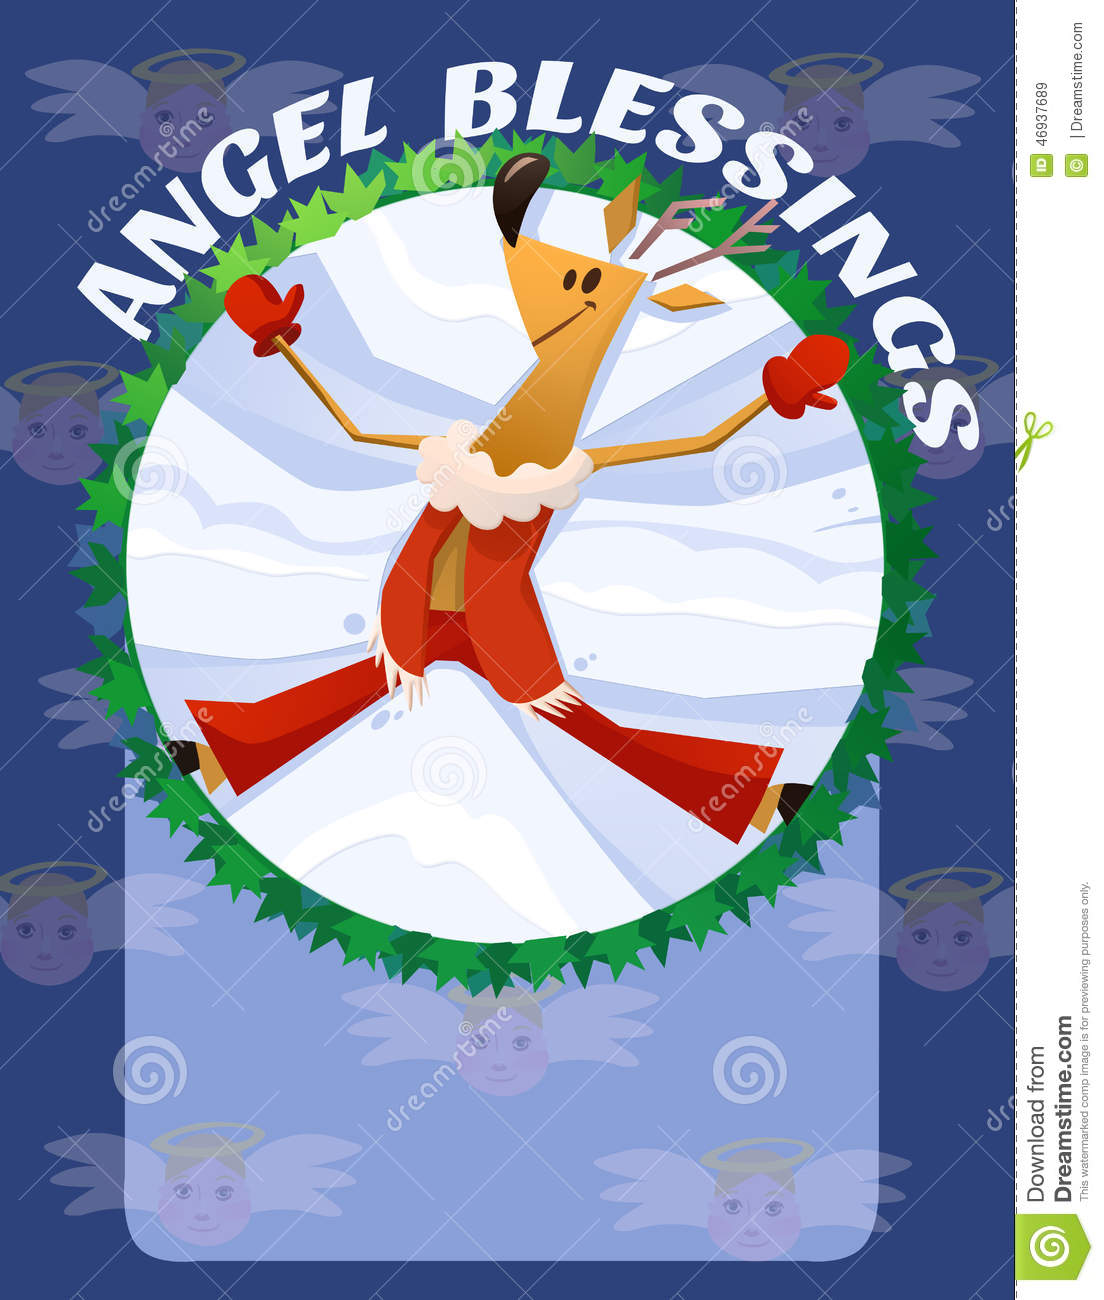 Angel Blessings Deer Cartoon Illustration Stock Illustration   Image